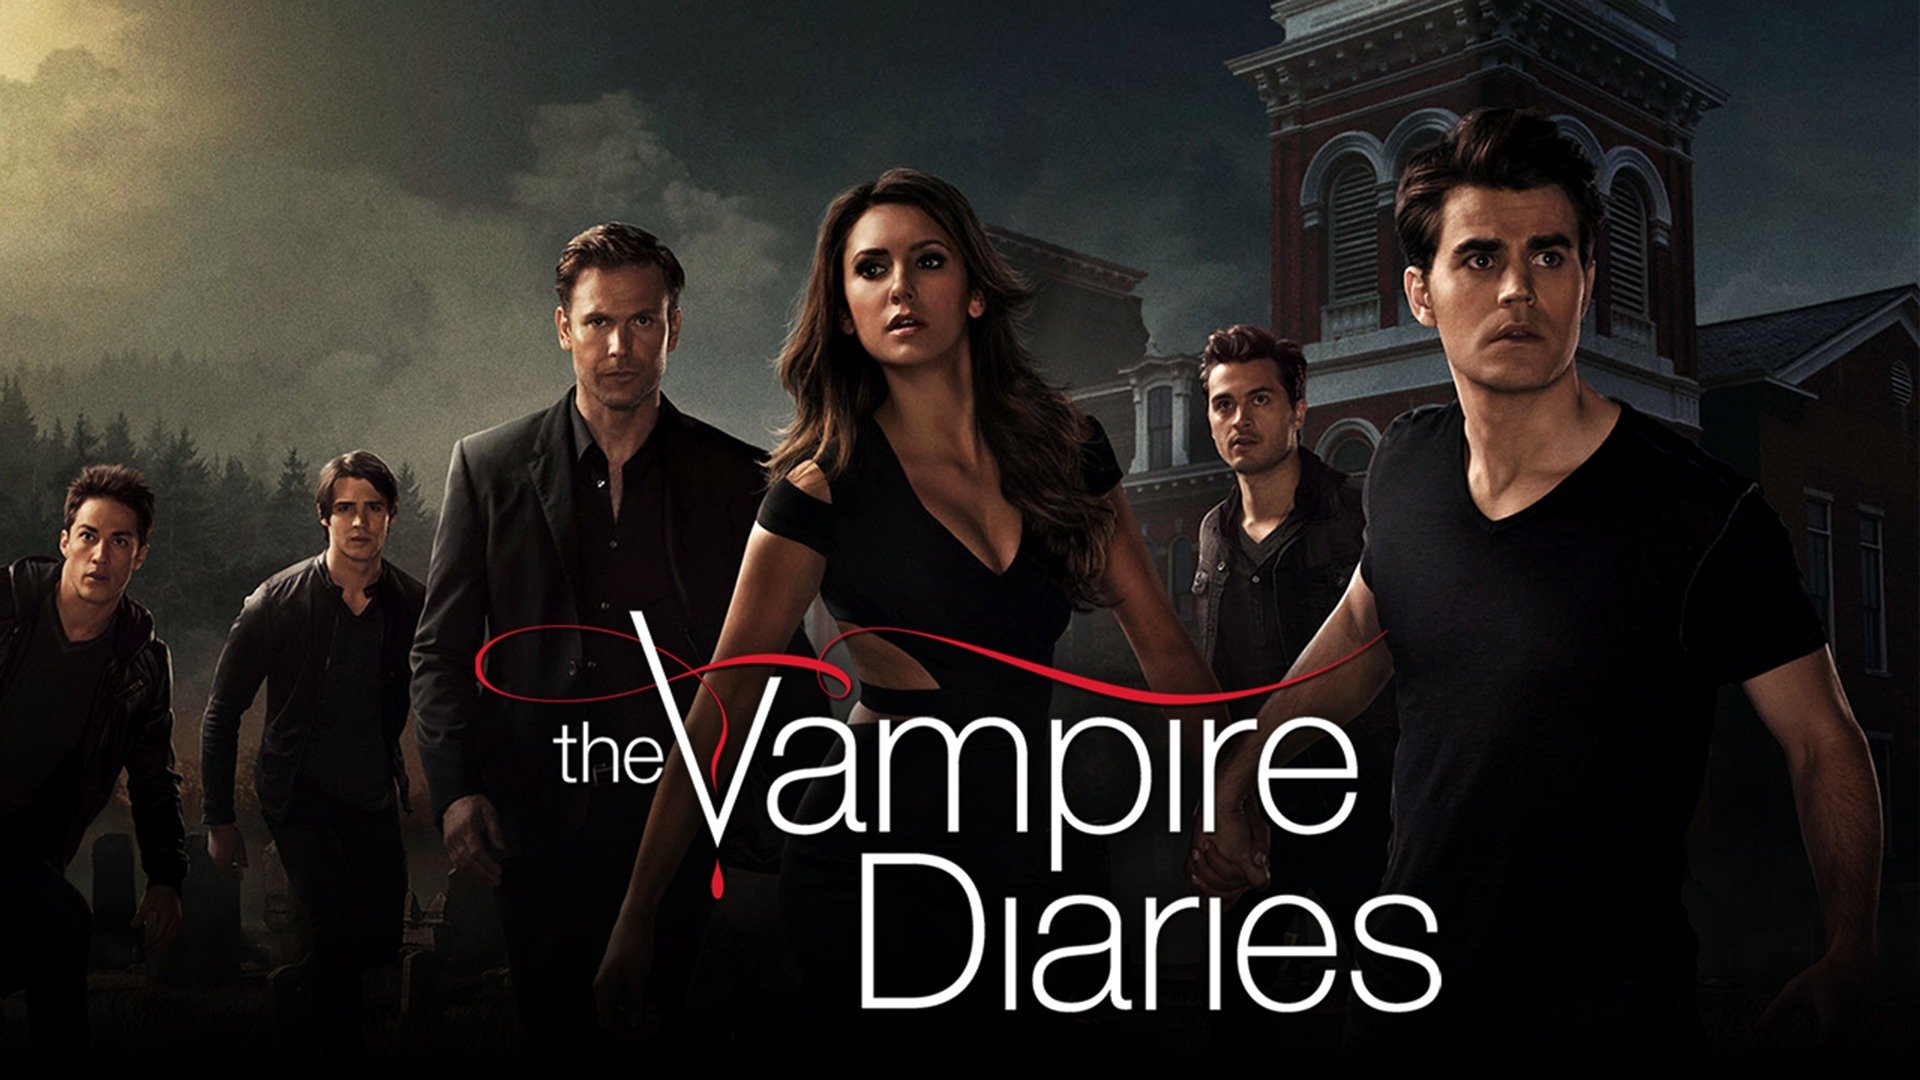 watch the vampire diaries season 6